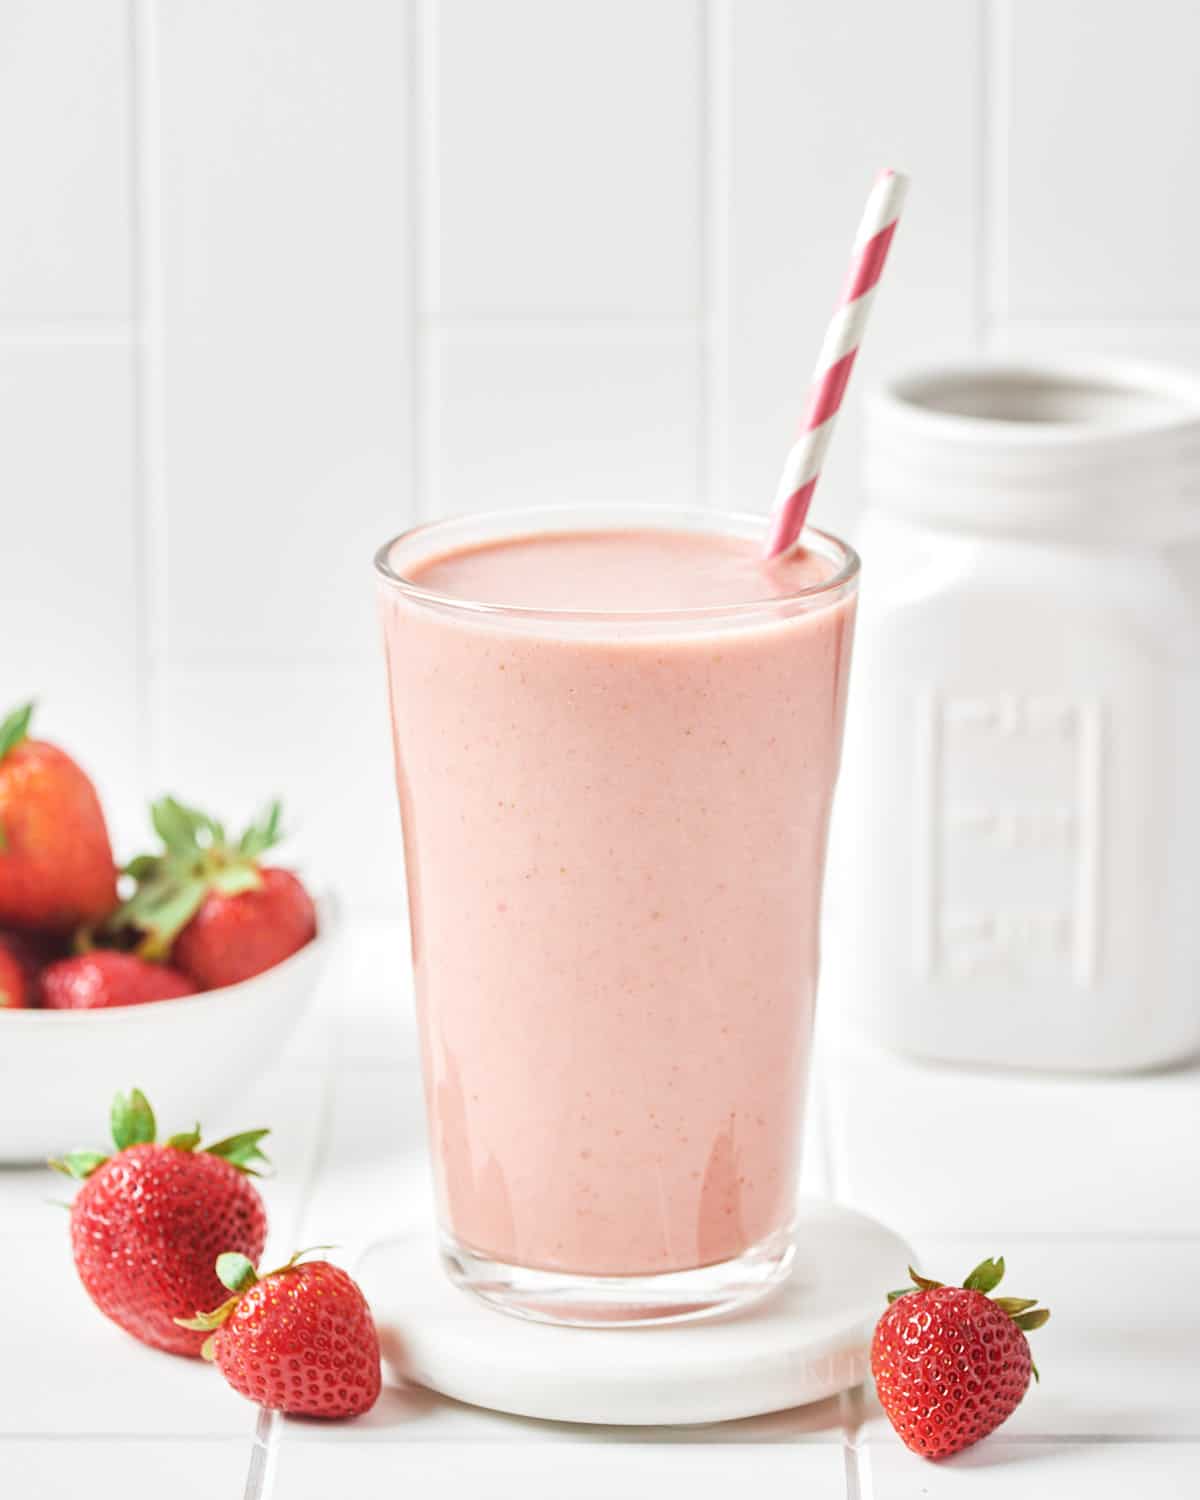 Glass of vegan strawberry milk with strawberries.